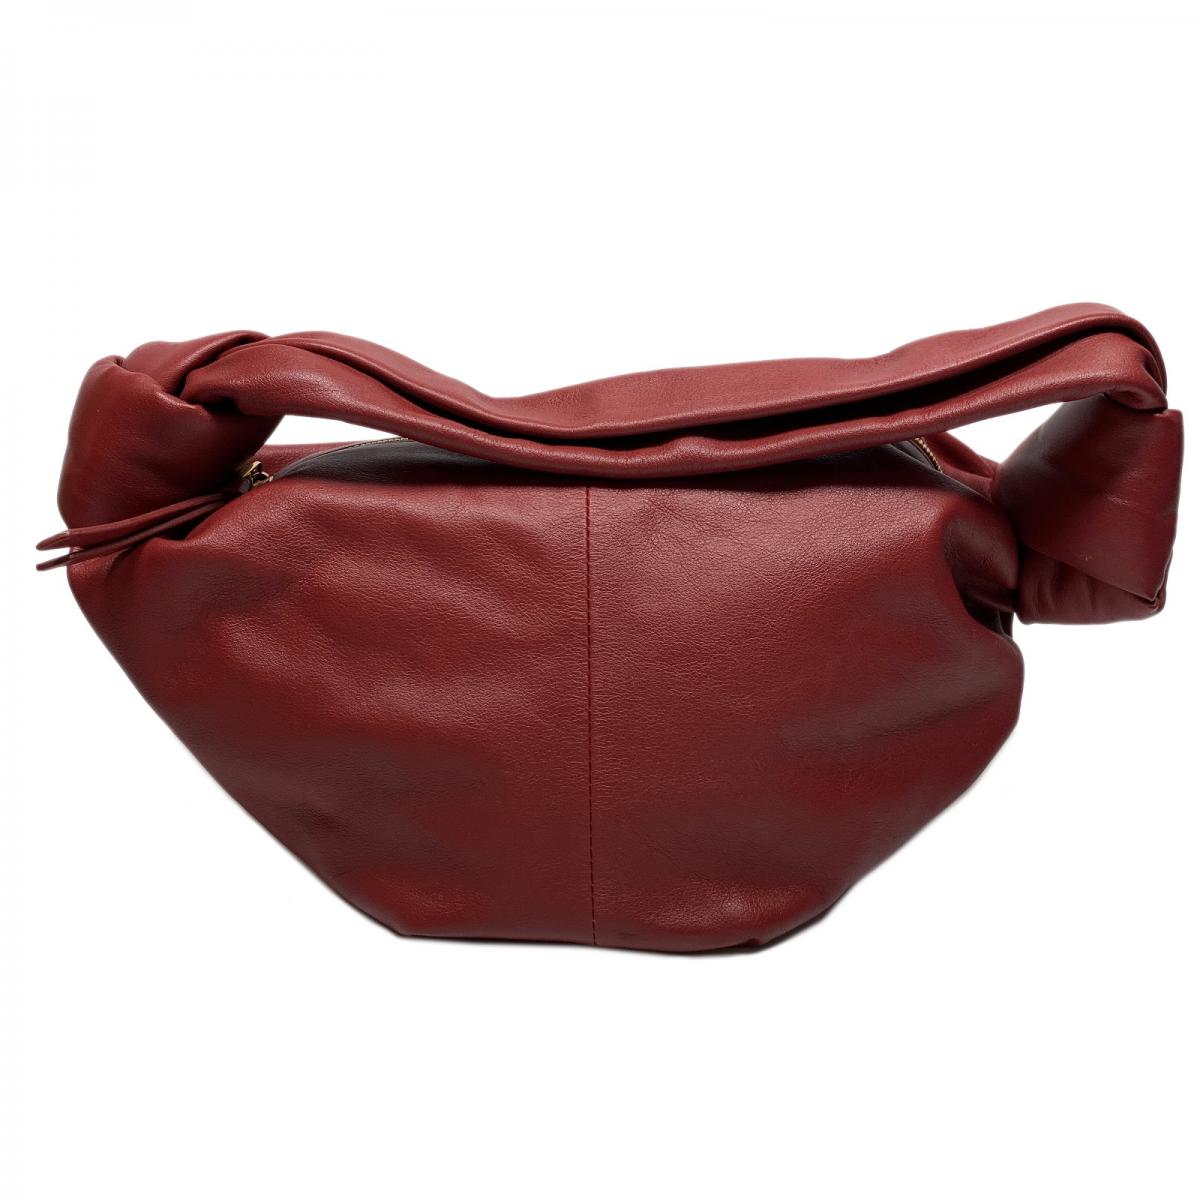 Jodie Leather Bag